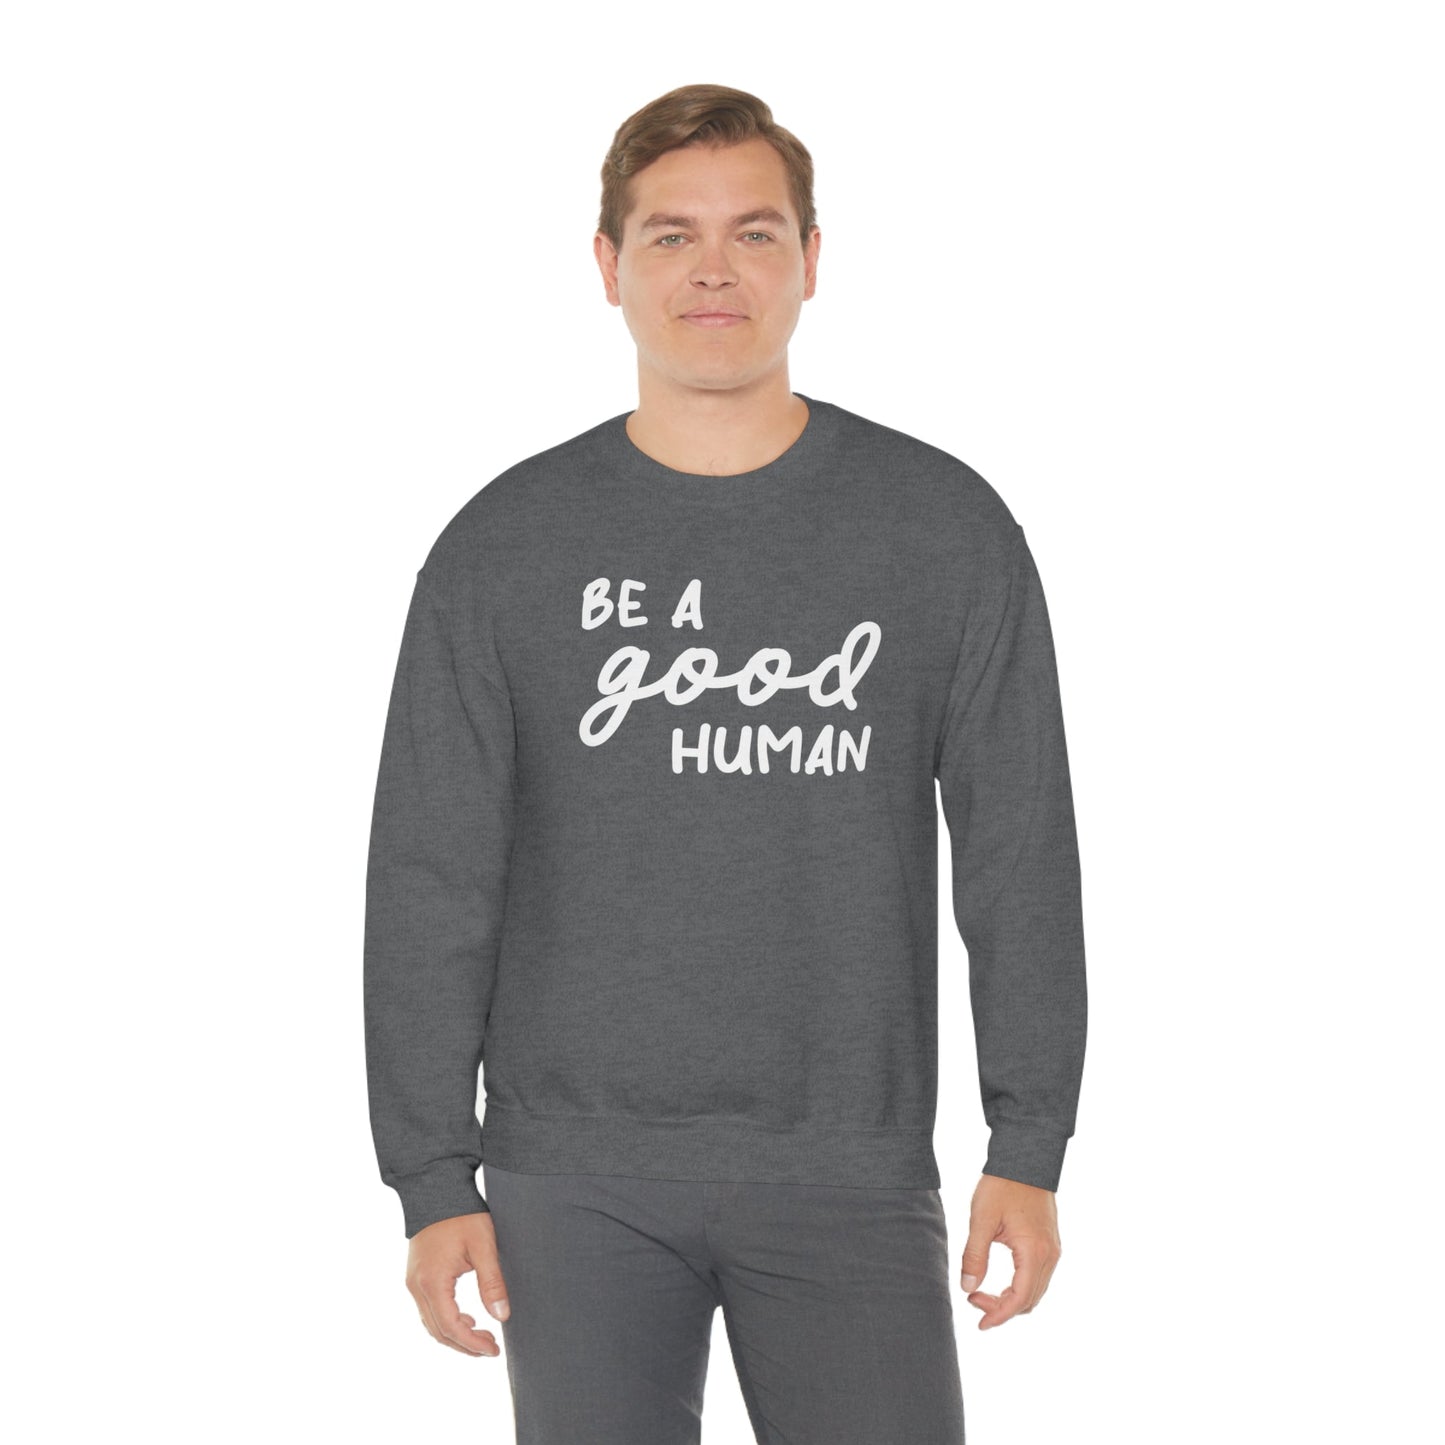 Be A Good Human | Crewneck Sweatshirt - Detezi Designs-27173687691781911896